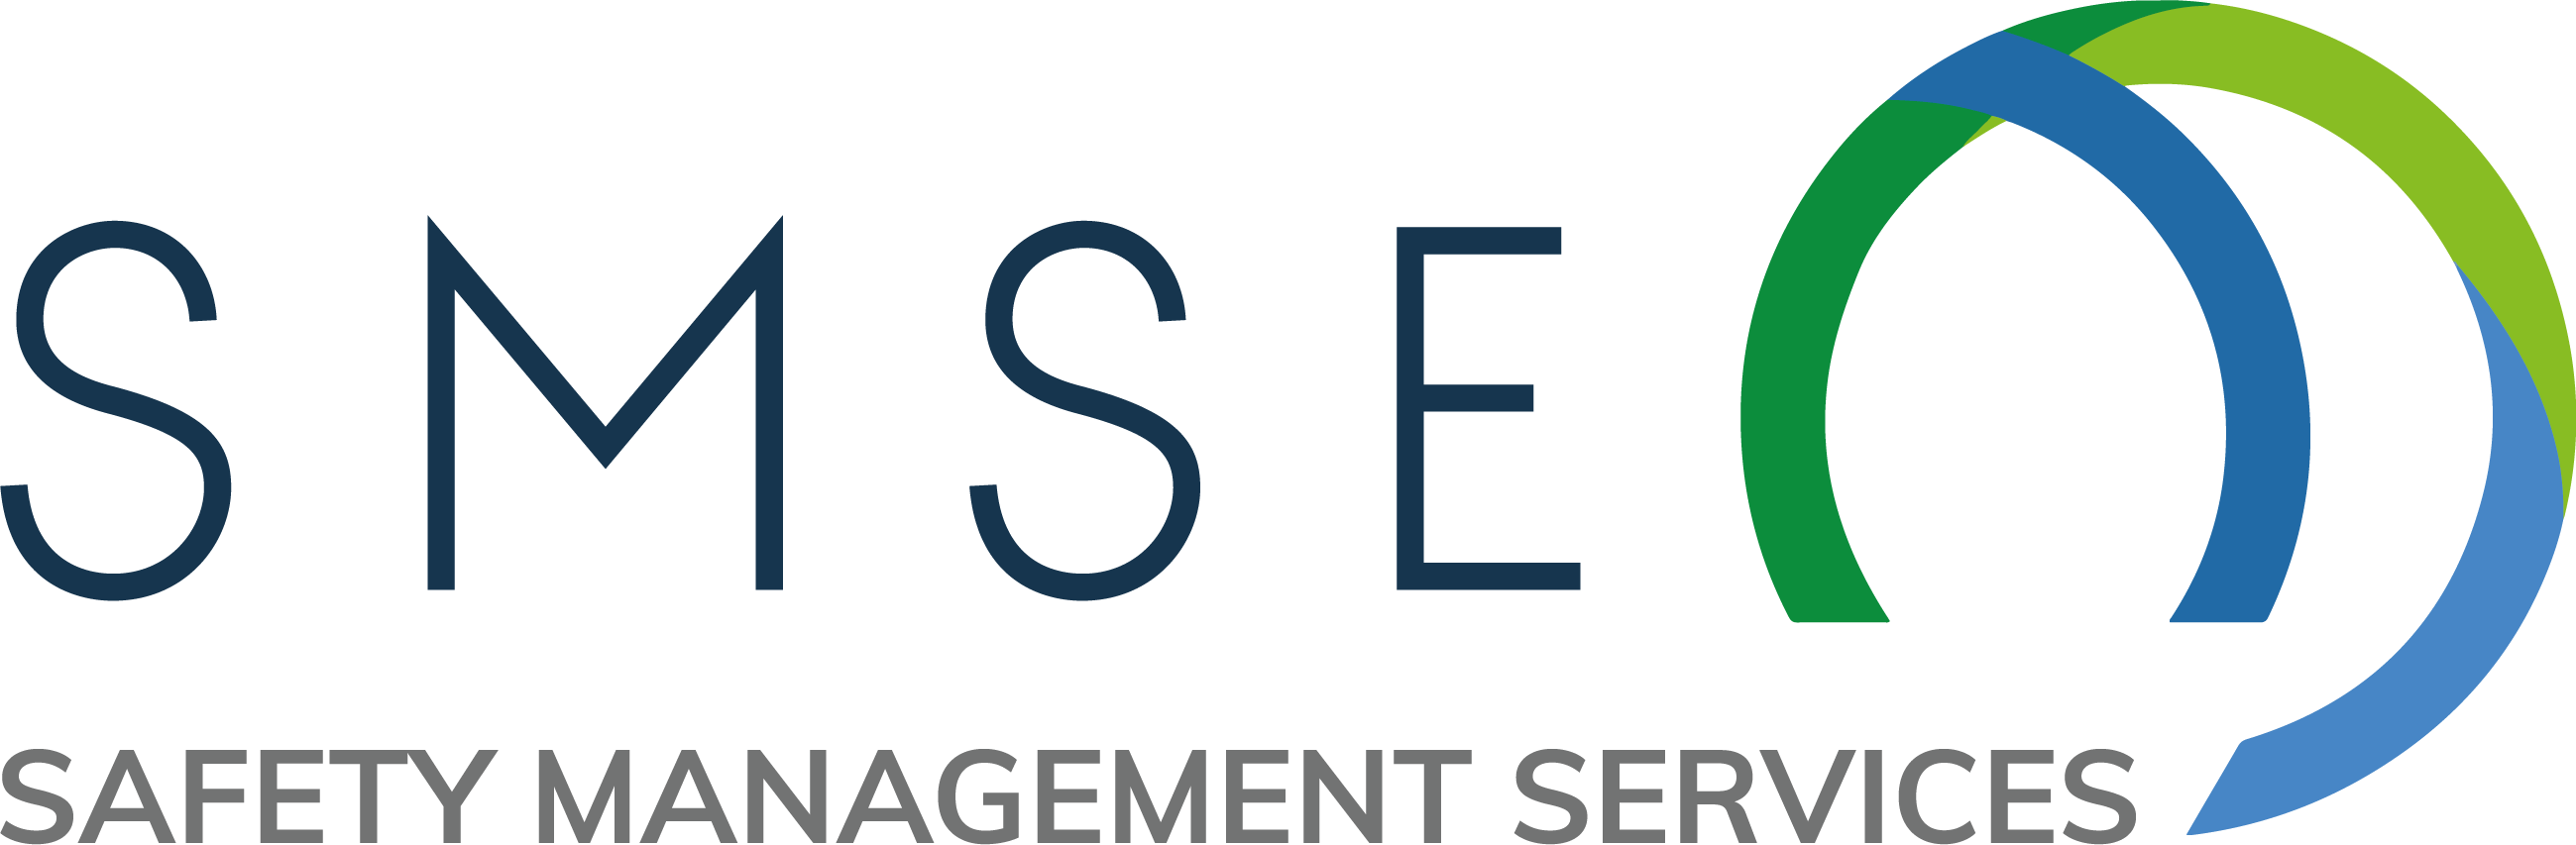 Safety Management Services Europe Ltd Logo